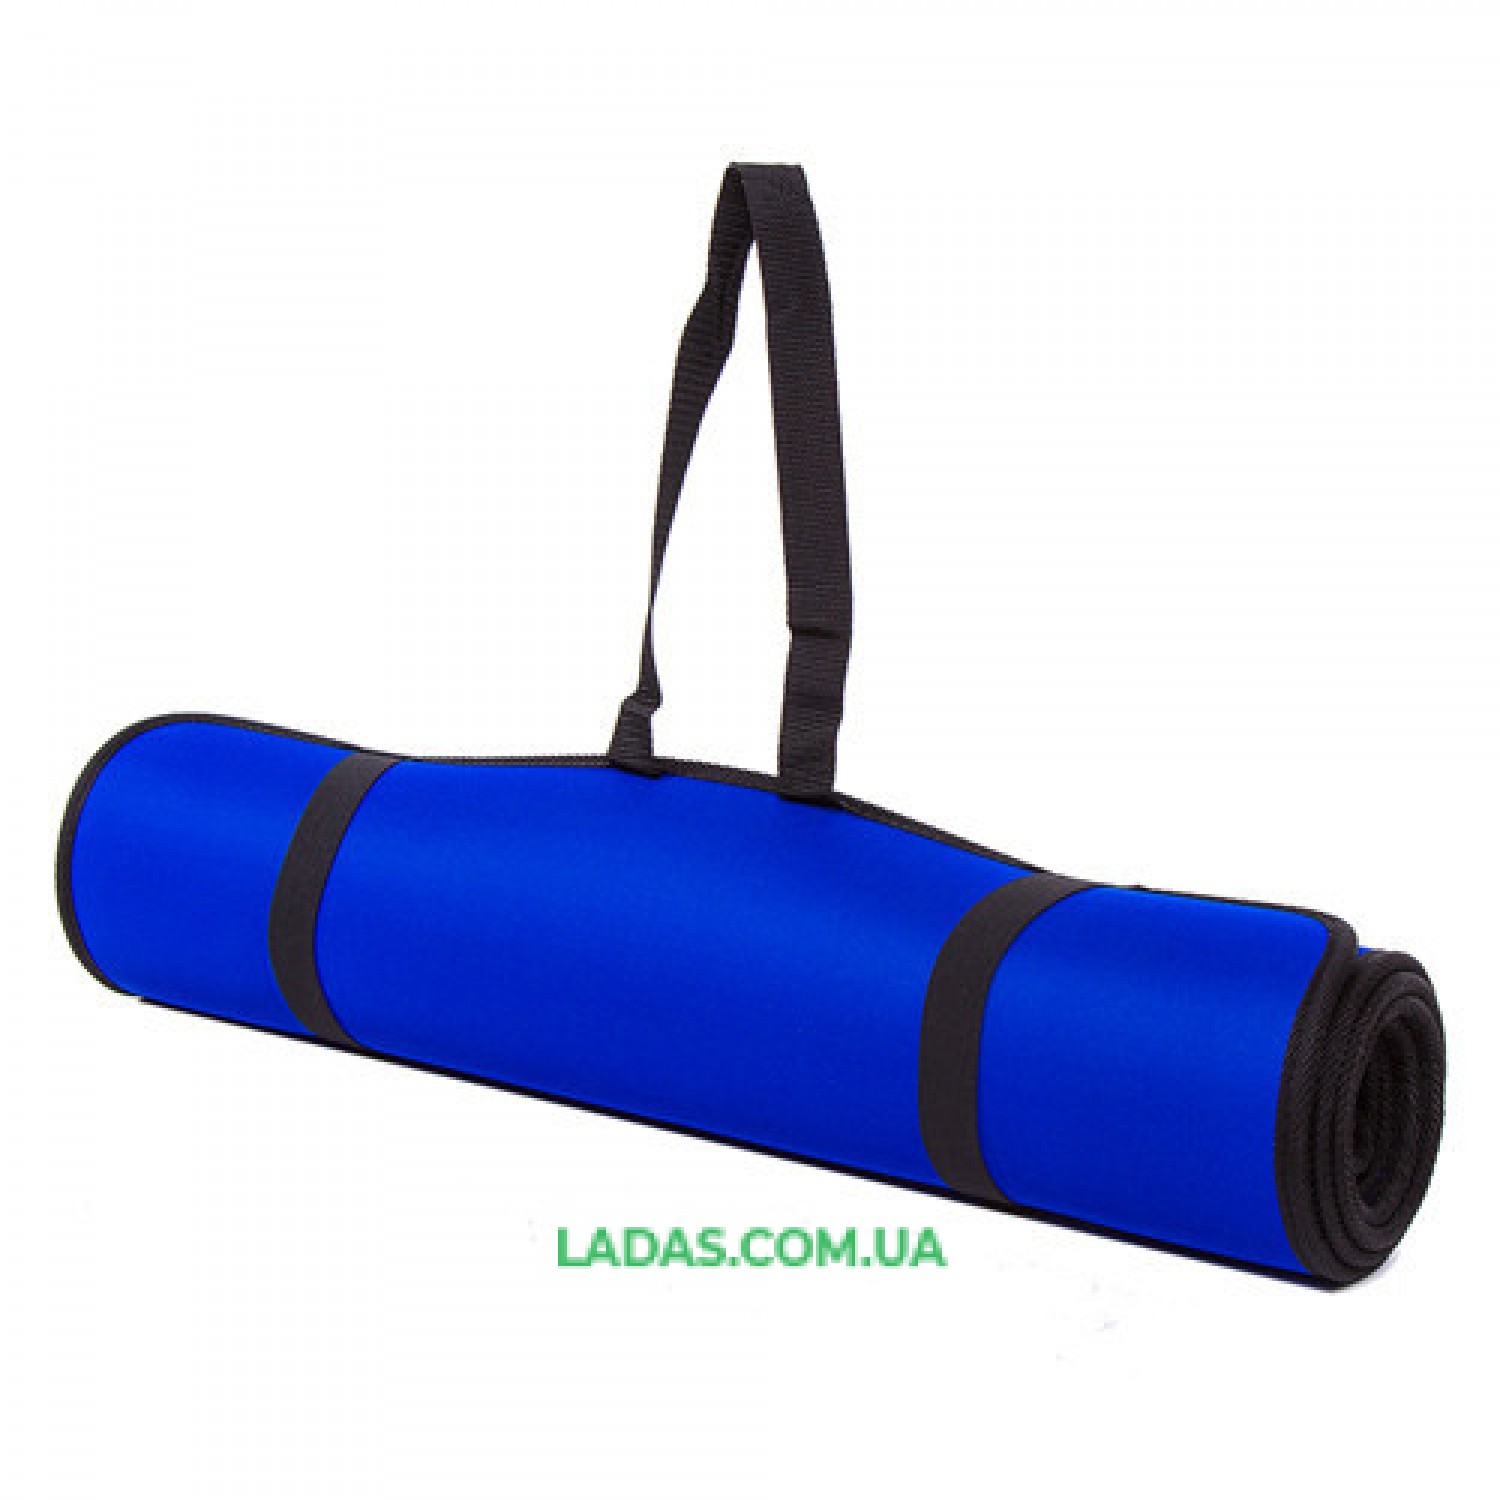 Йогамат, коврик для фитнеса, EVA, IronMaster 180x60x0.6см, синий